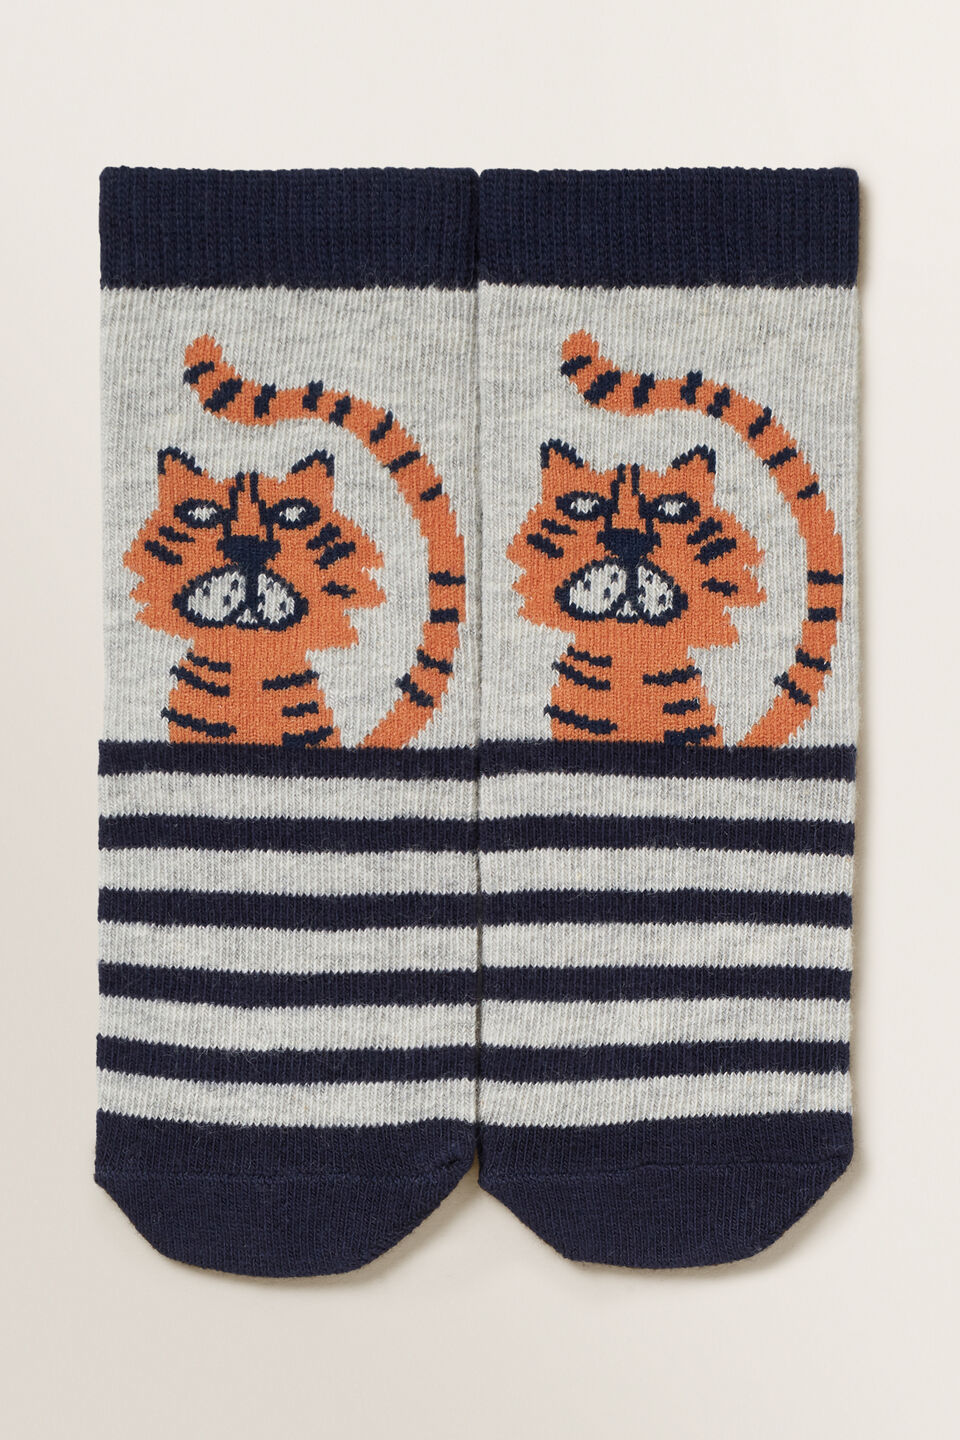 Tiger Socks  